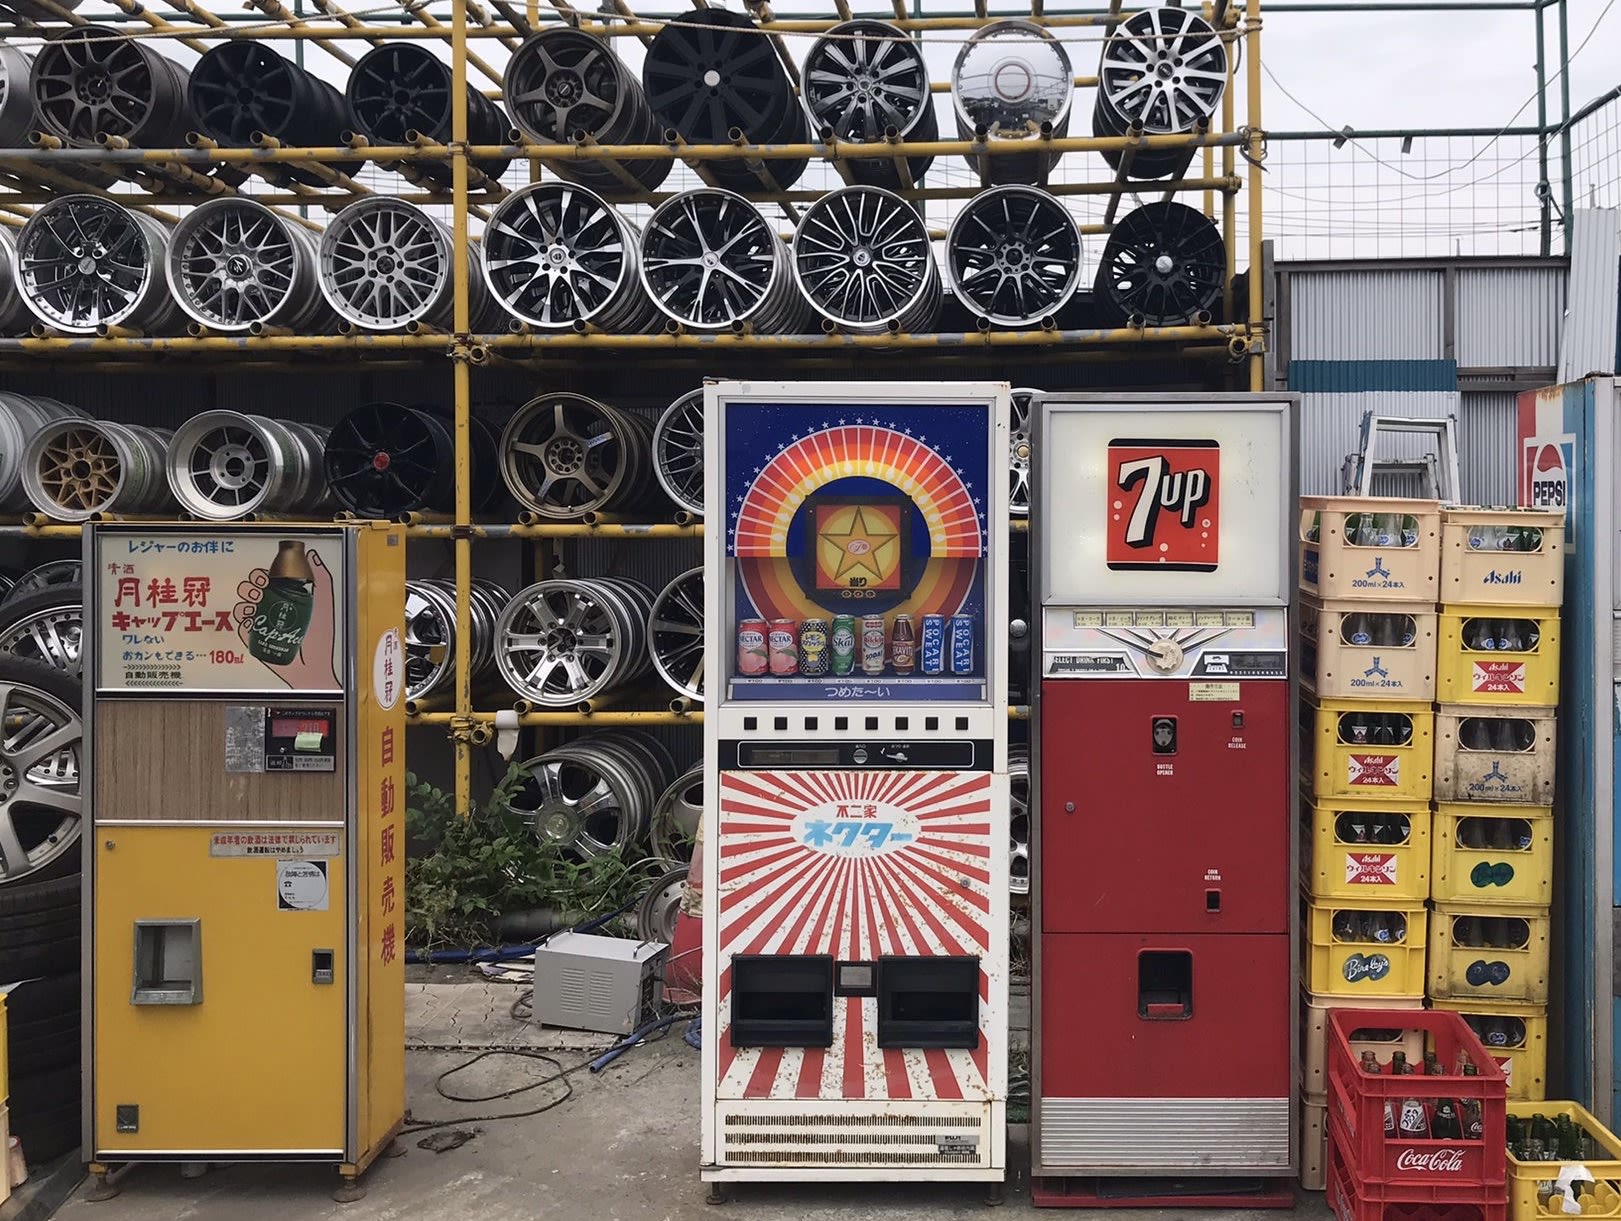 https://media.cnn.com/api/v1/images/stellar/prod/220803100252-06-sagamihara-japan-vending-machine.jpg?c=original